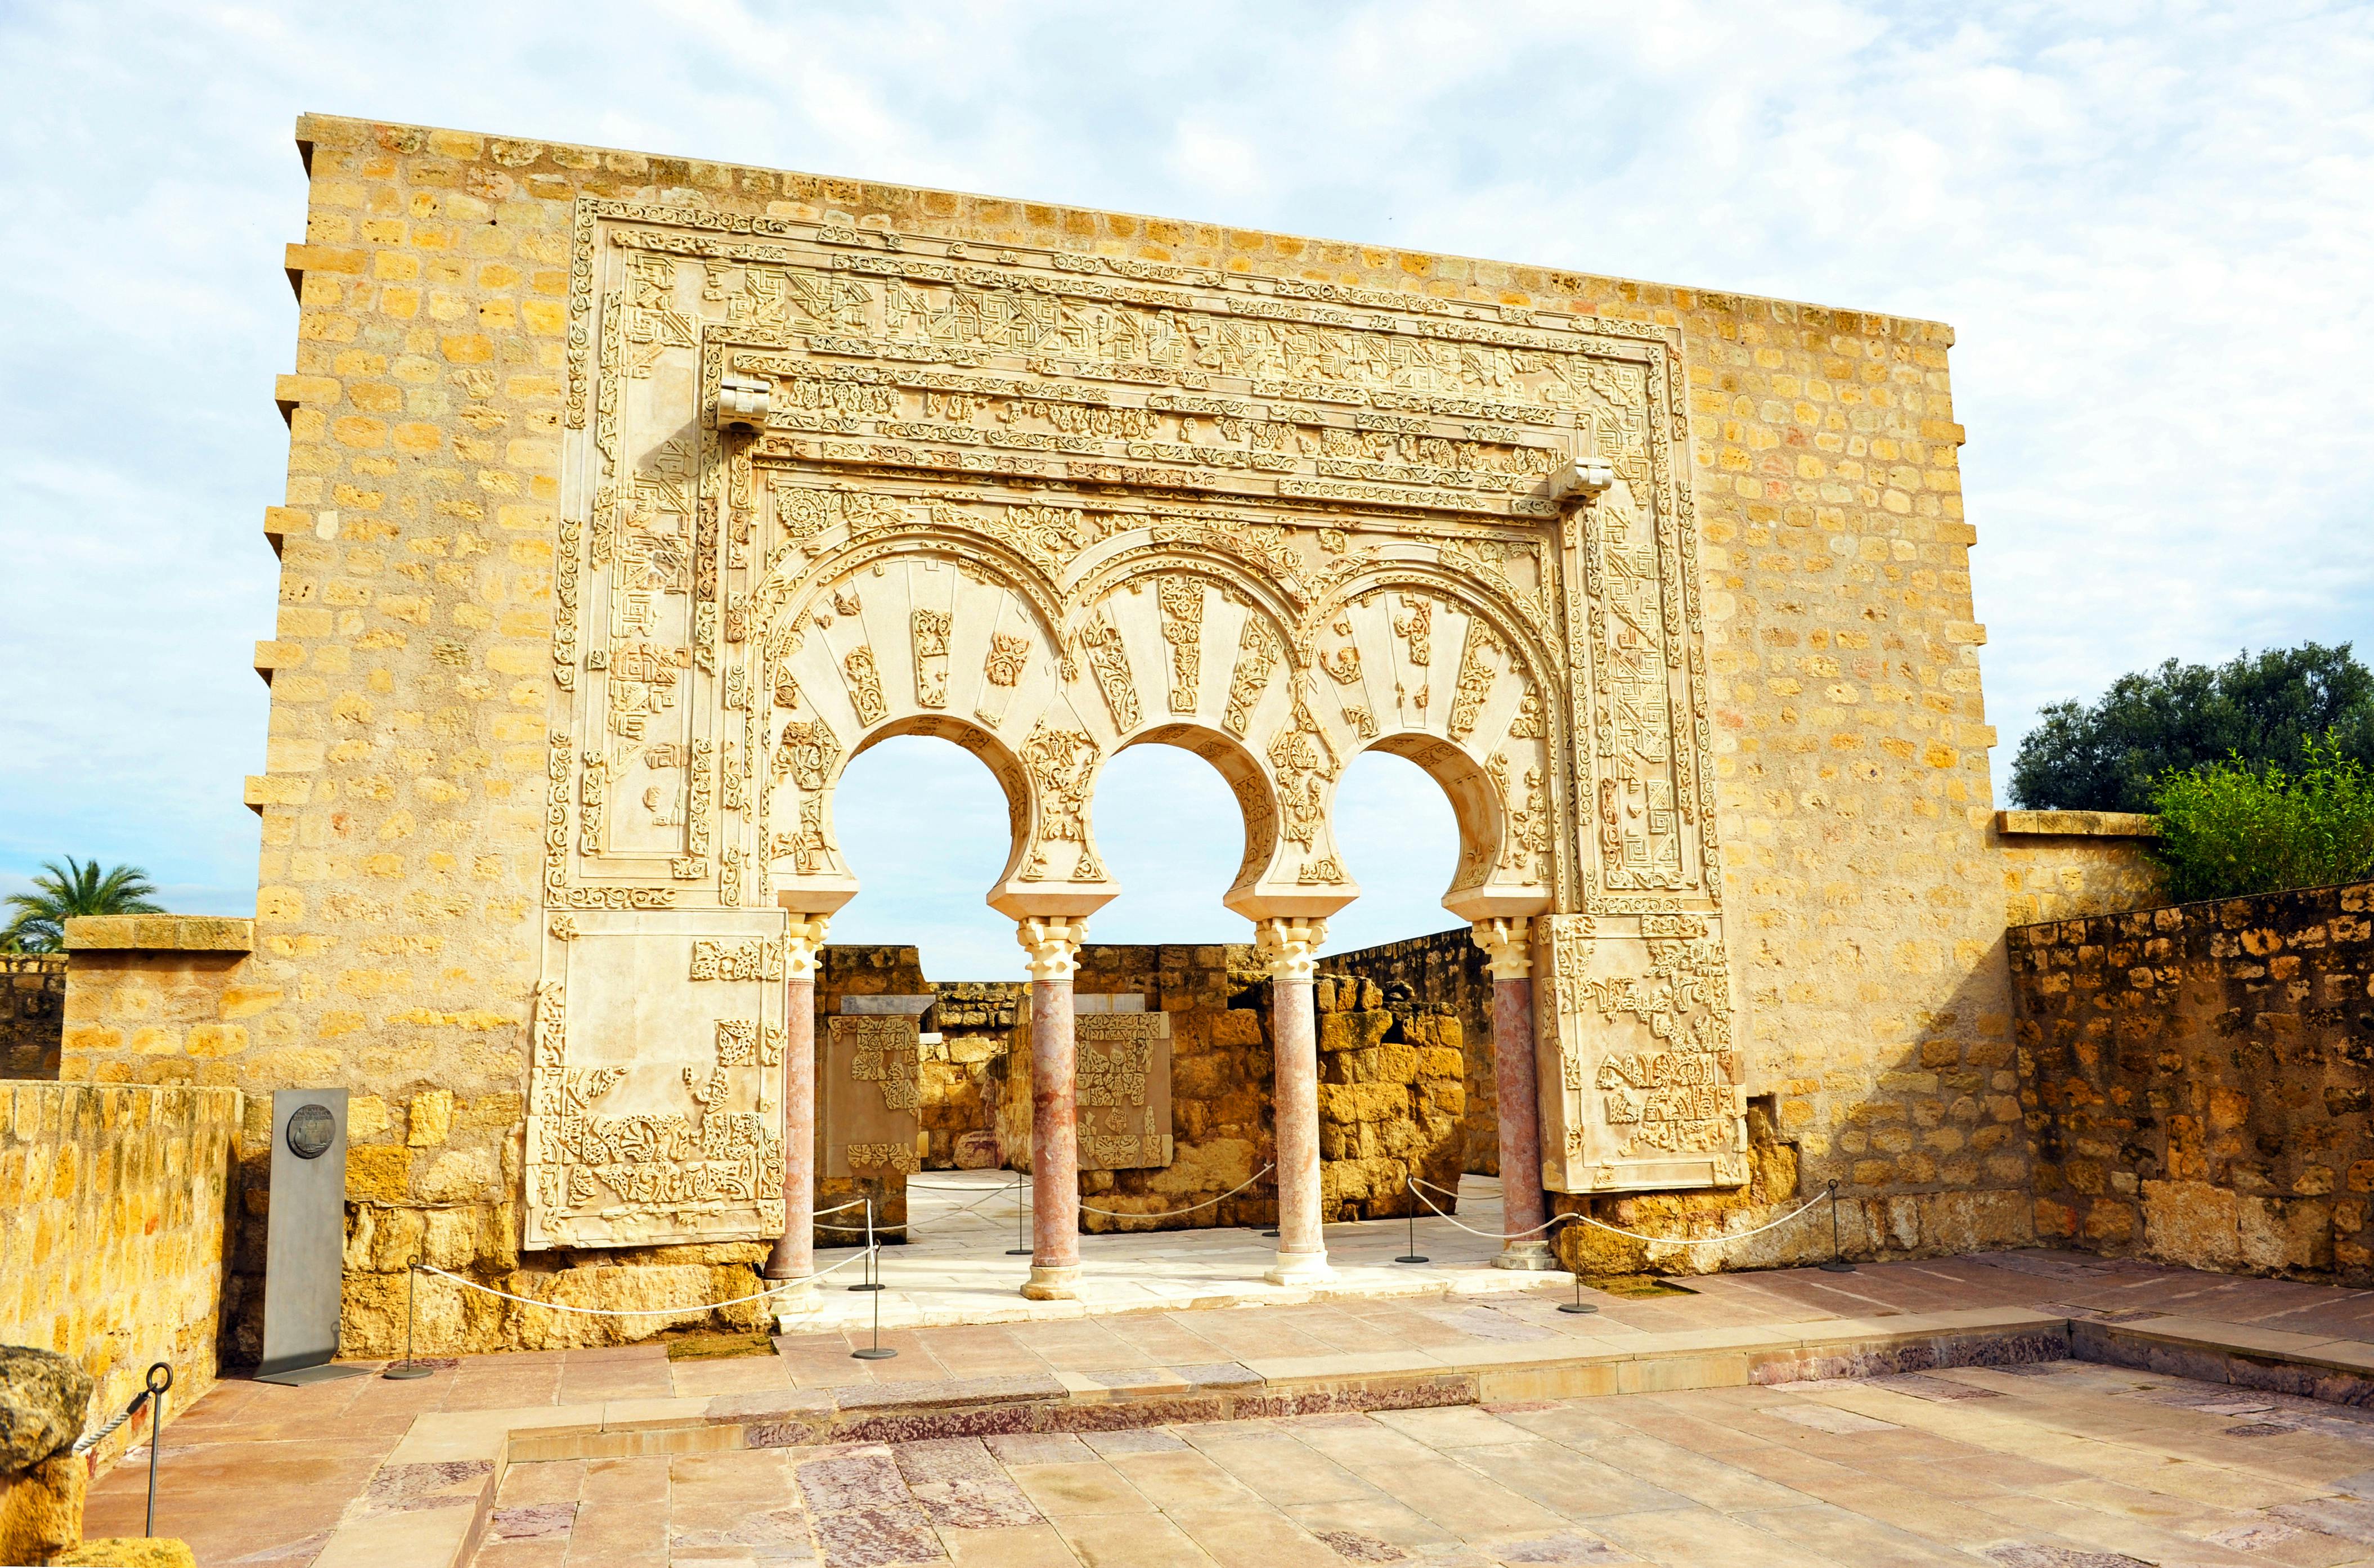 Visita guiada al sitio arqueológico de Medina Azahara